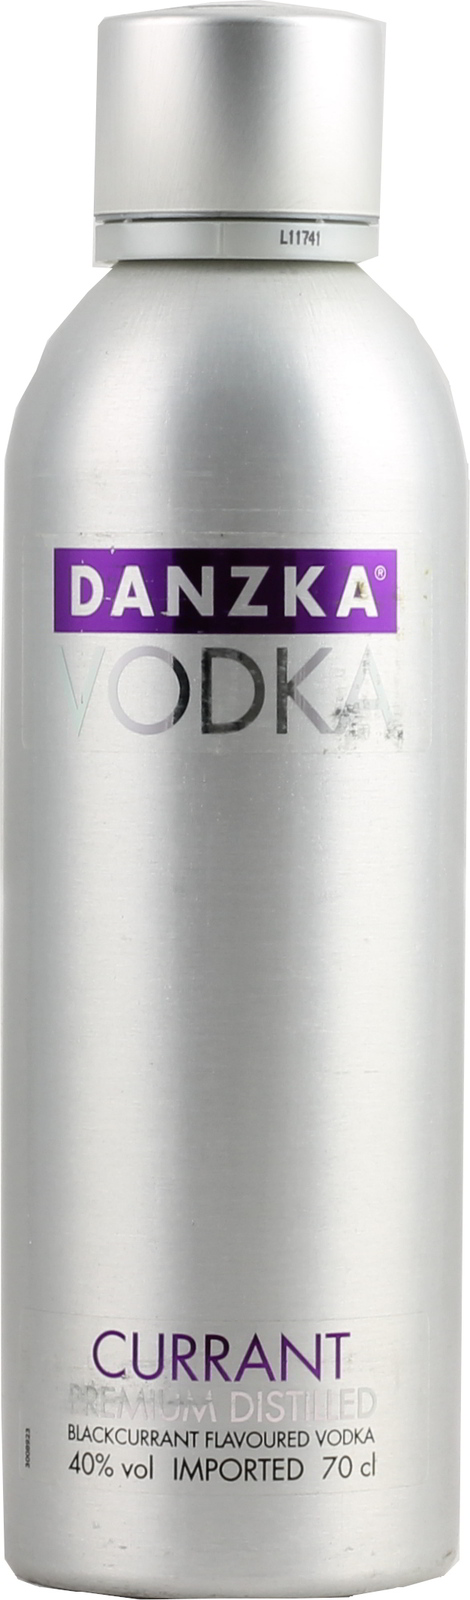 Danzka Currant Vodka online kaufen